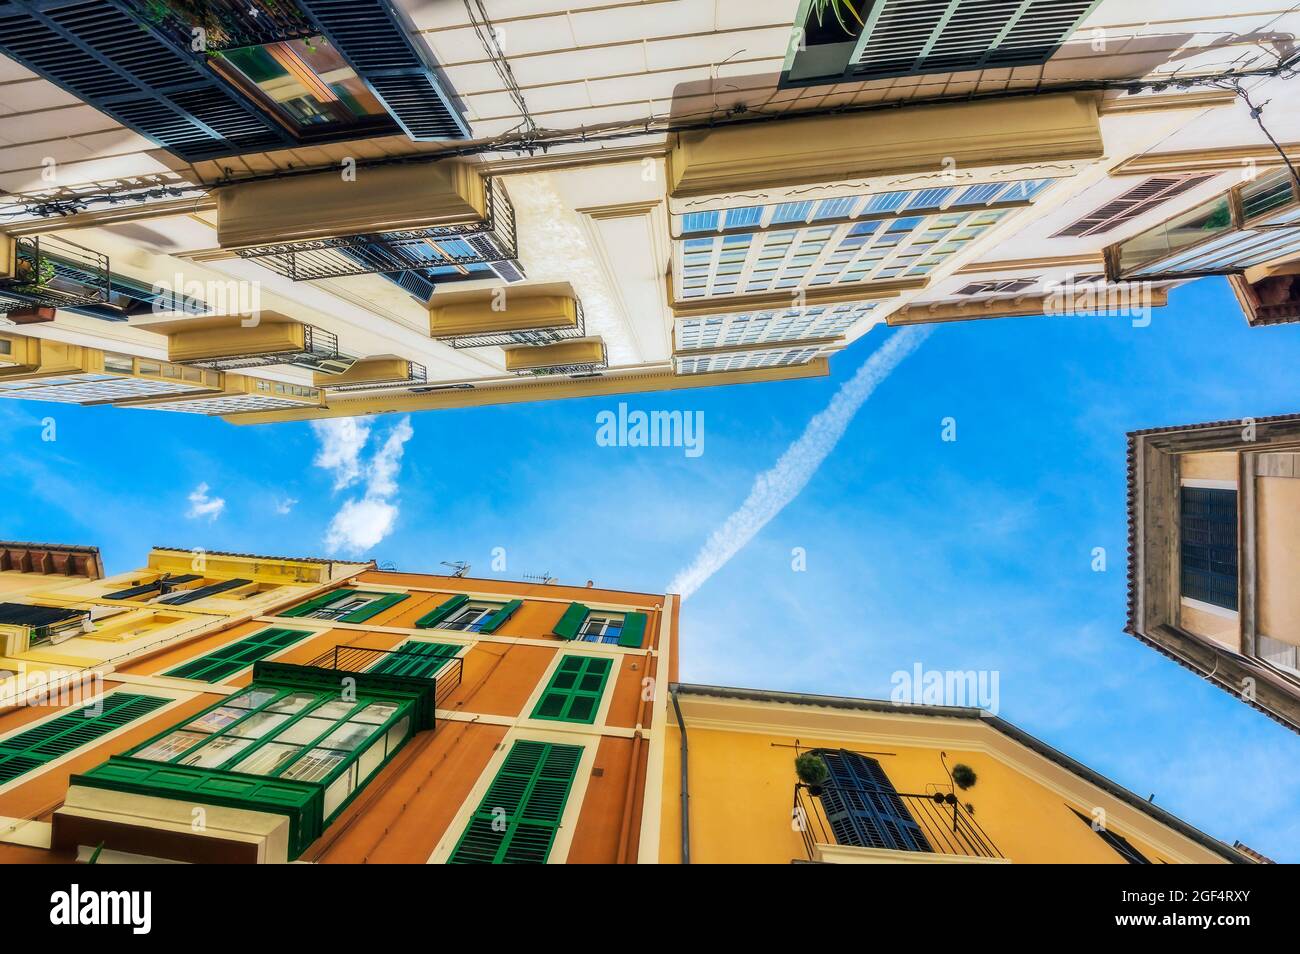 Spain, Mallorca, Palma de Mallorca, Directly below view of sky over residential city buildings Stock Photo